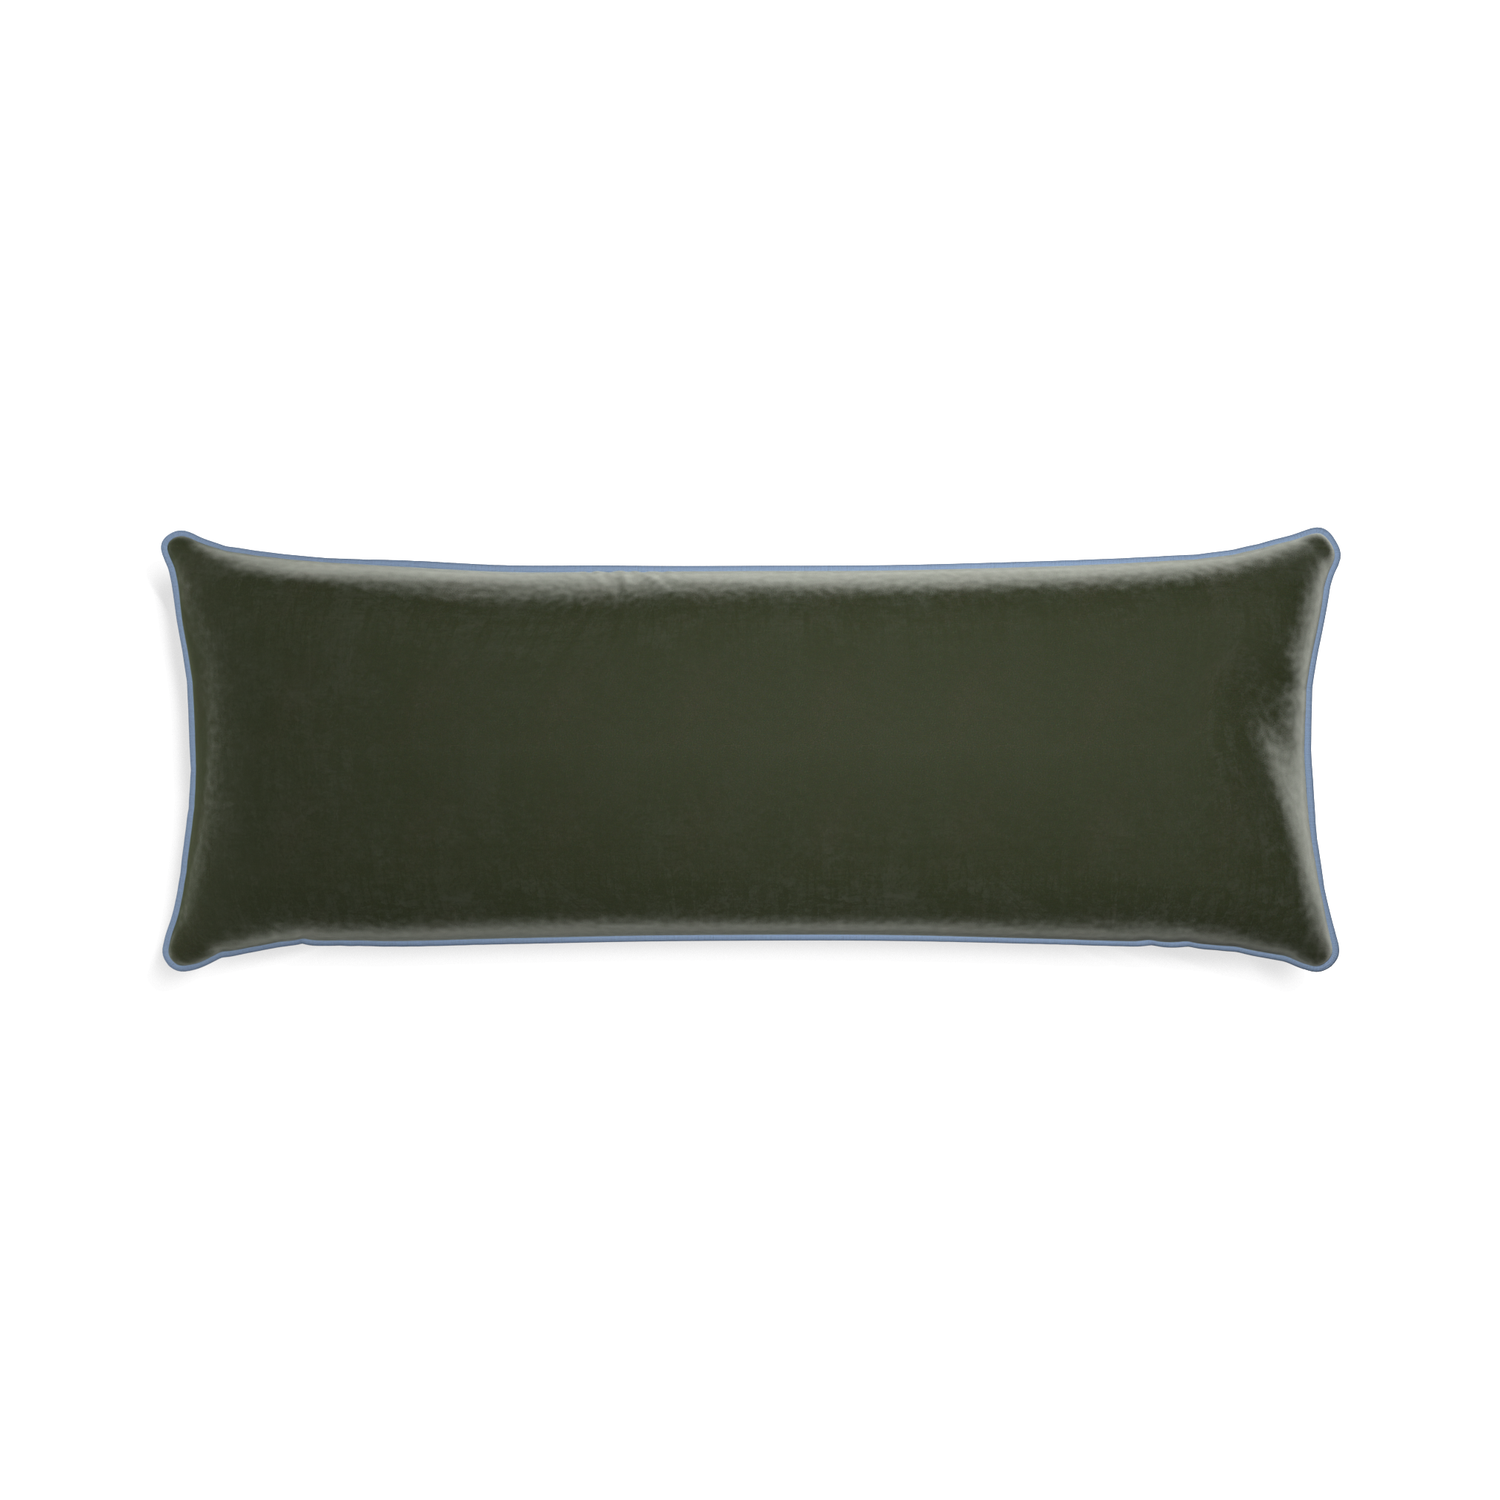 rectangle fern green velvet pillow with sky blue piping